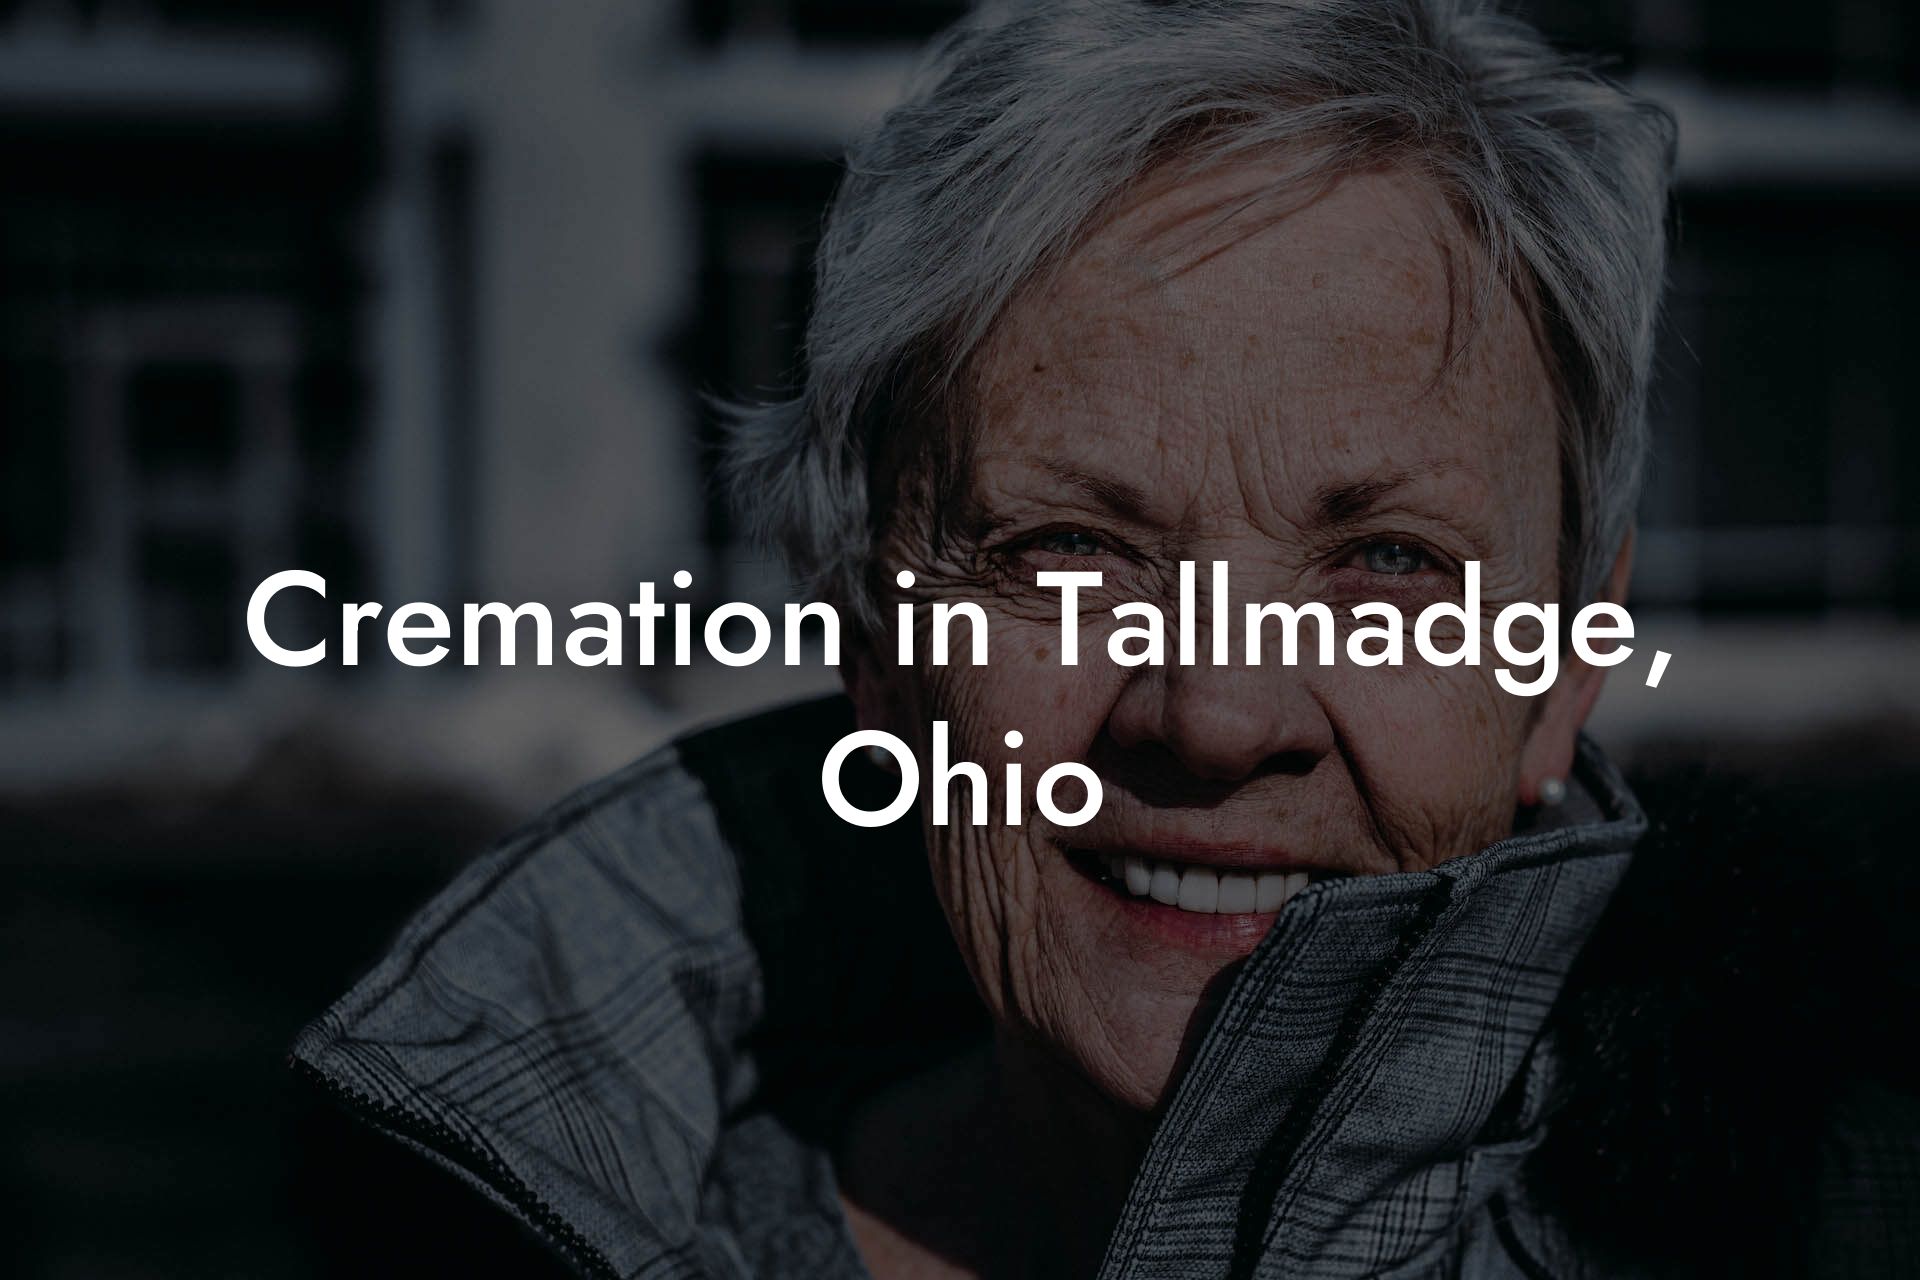 Cremation in Tallmadge, Ohio